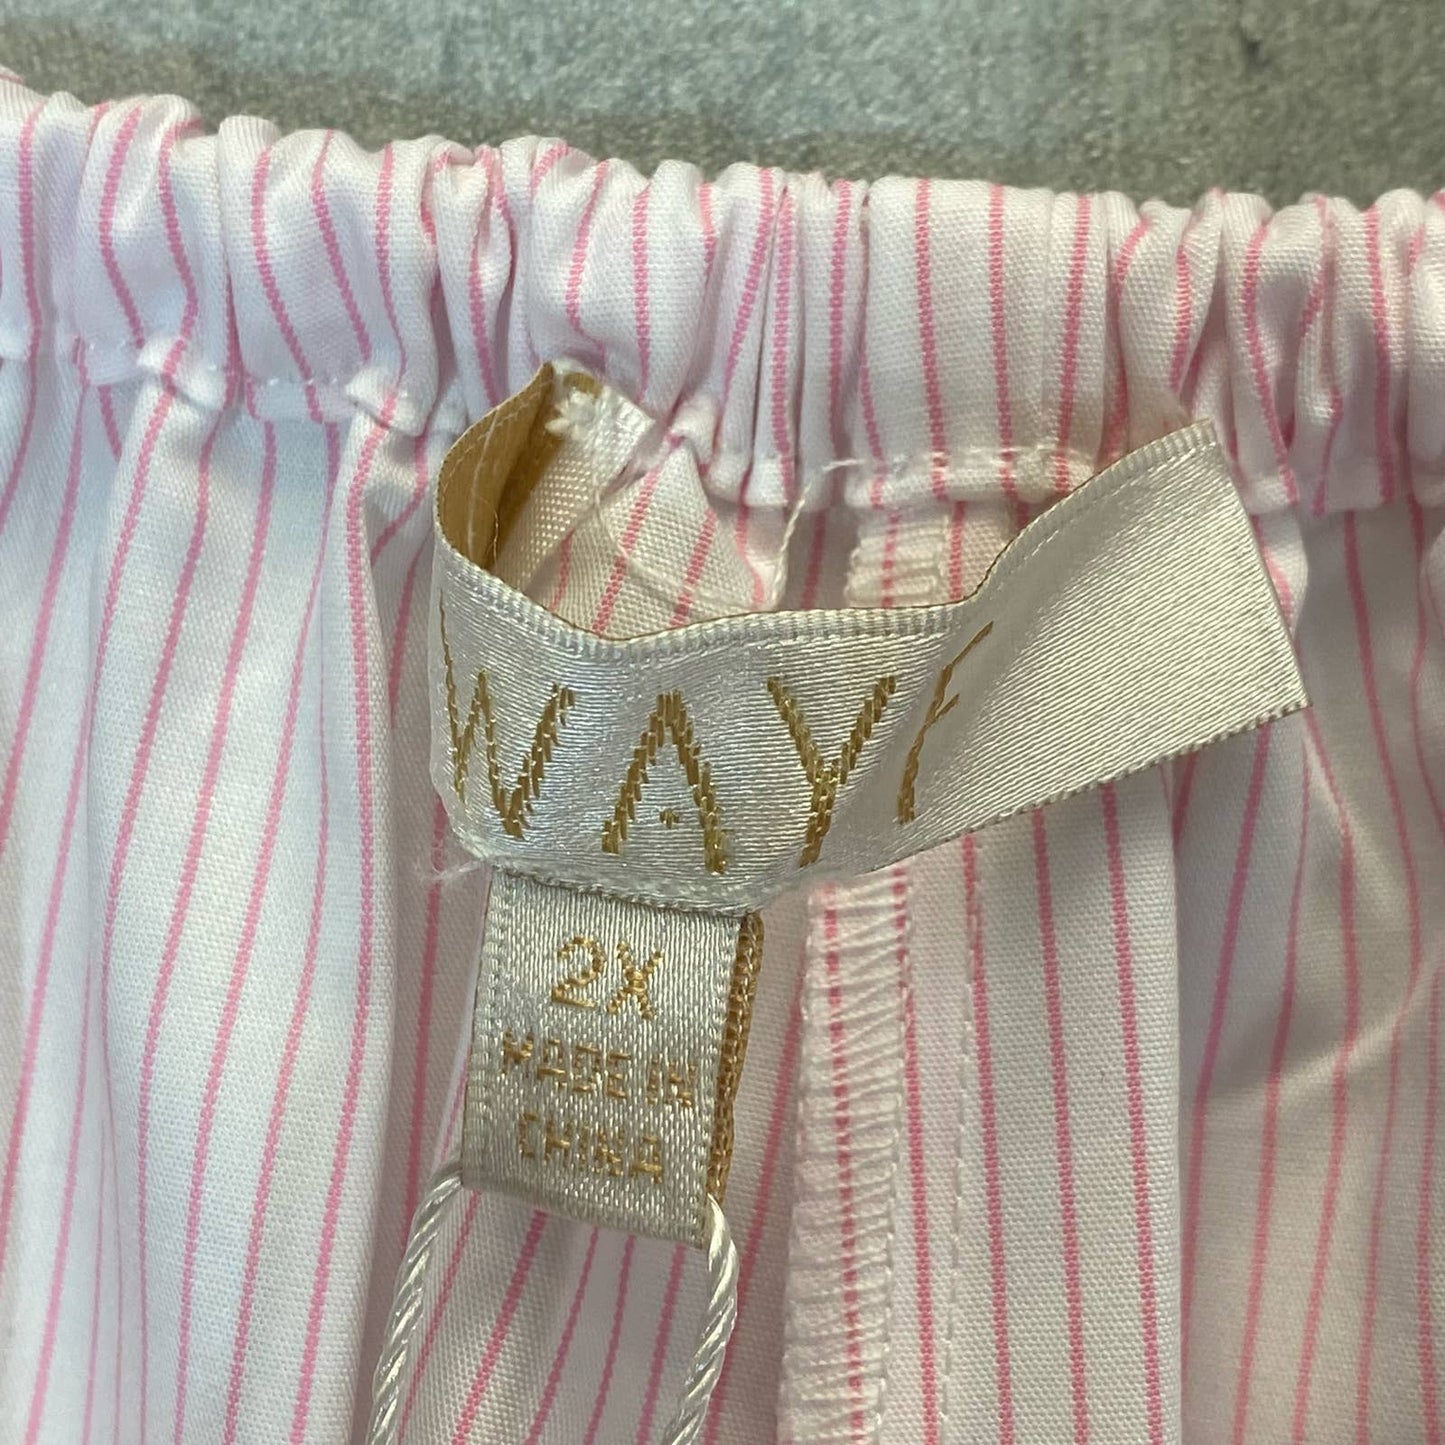 WAYF Women's Plus Size Pink Striped Lightweight Lounge Pajama Pull-On Shorts SZ 2X